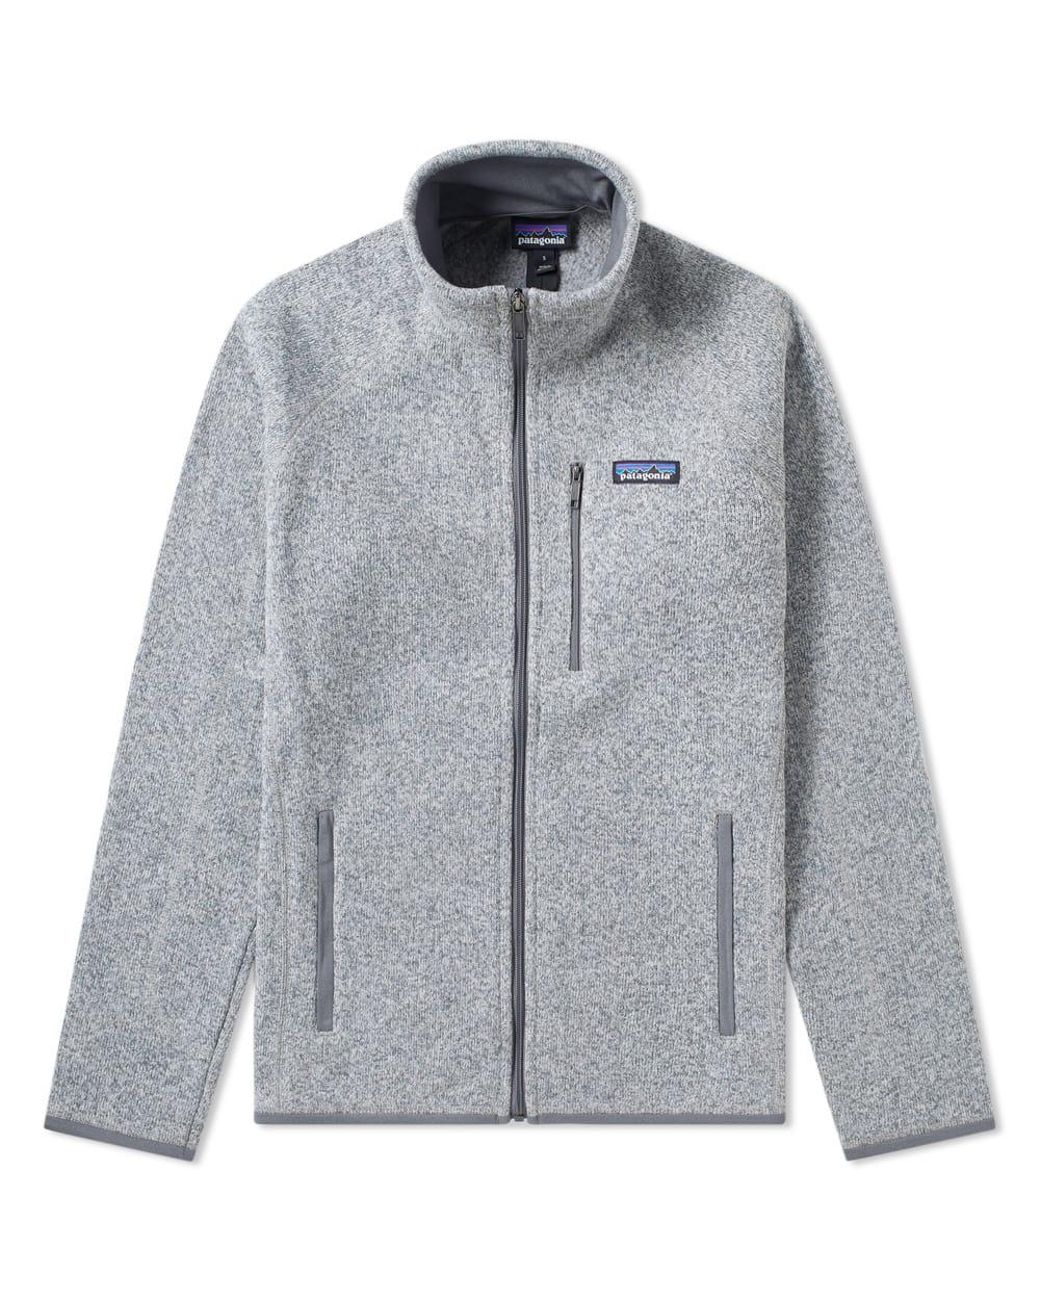 Patagonia Fleece Better Sweater Jacket in Stonewash (Gray) for Men ...